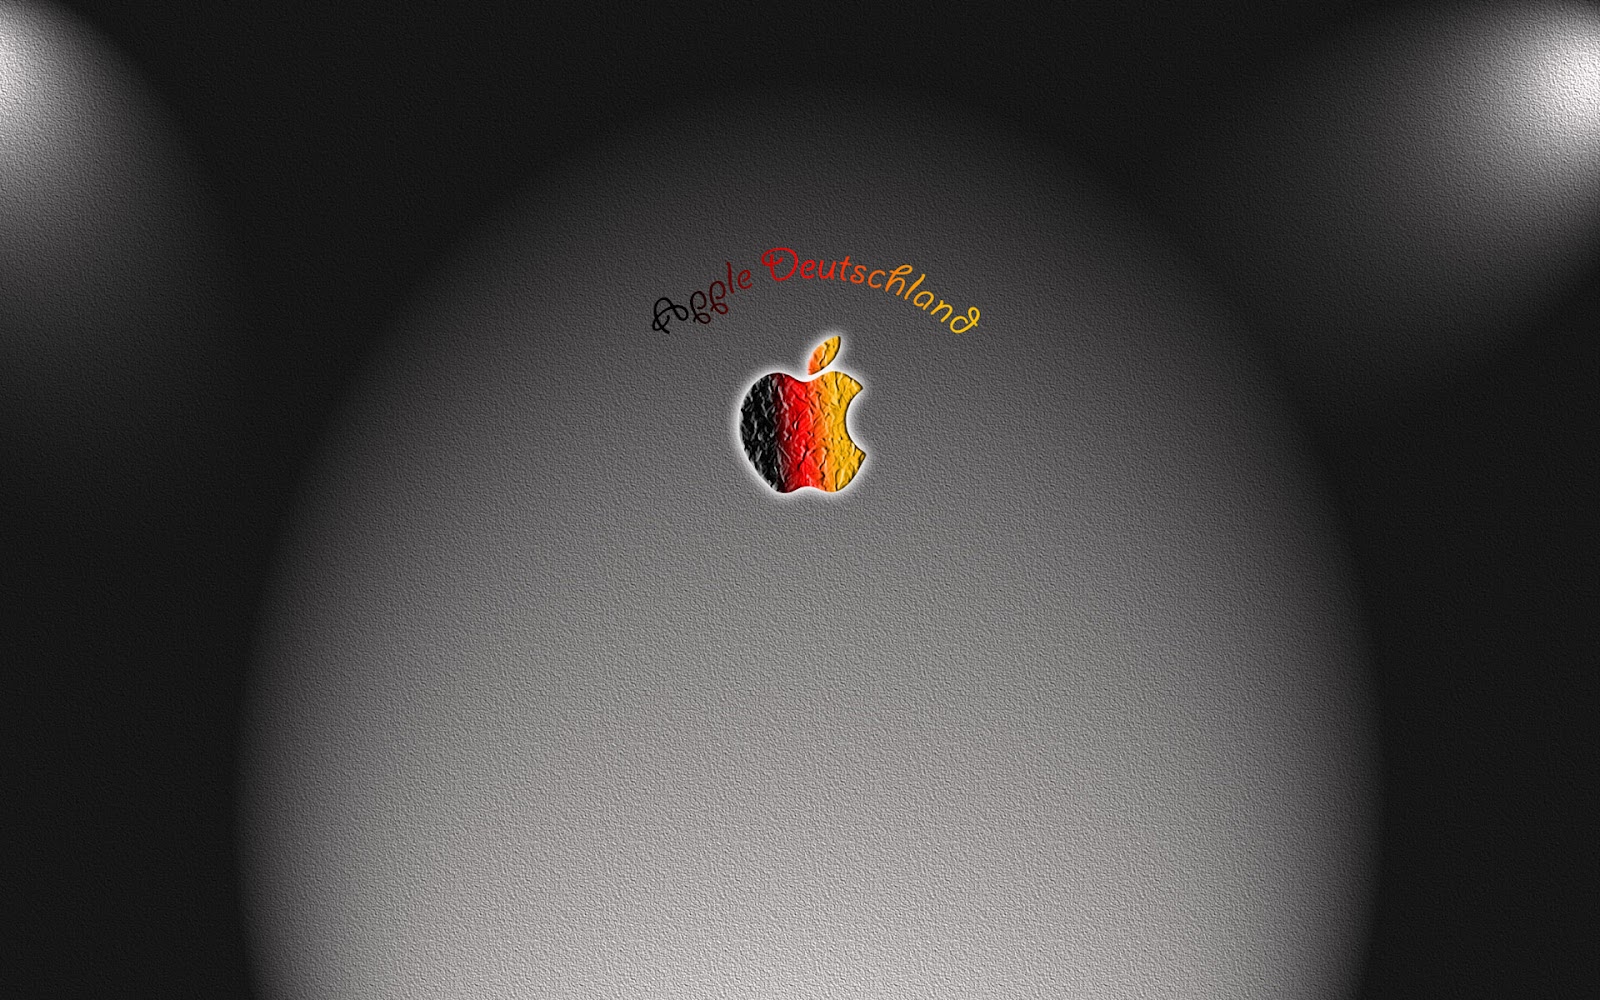 http://1.bp.blogspot.com/-s0LRarfpGQ8/UC9e_Nt9uKI/AAAAAAAAAeM/WmoY1UnBzWc/s1600/hd-grijze-apple-wallpaper-met-gekleurde-apple-logo-en-tekst-apple-deutschland-hd-apple-achtergrond.jpg